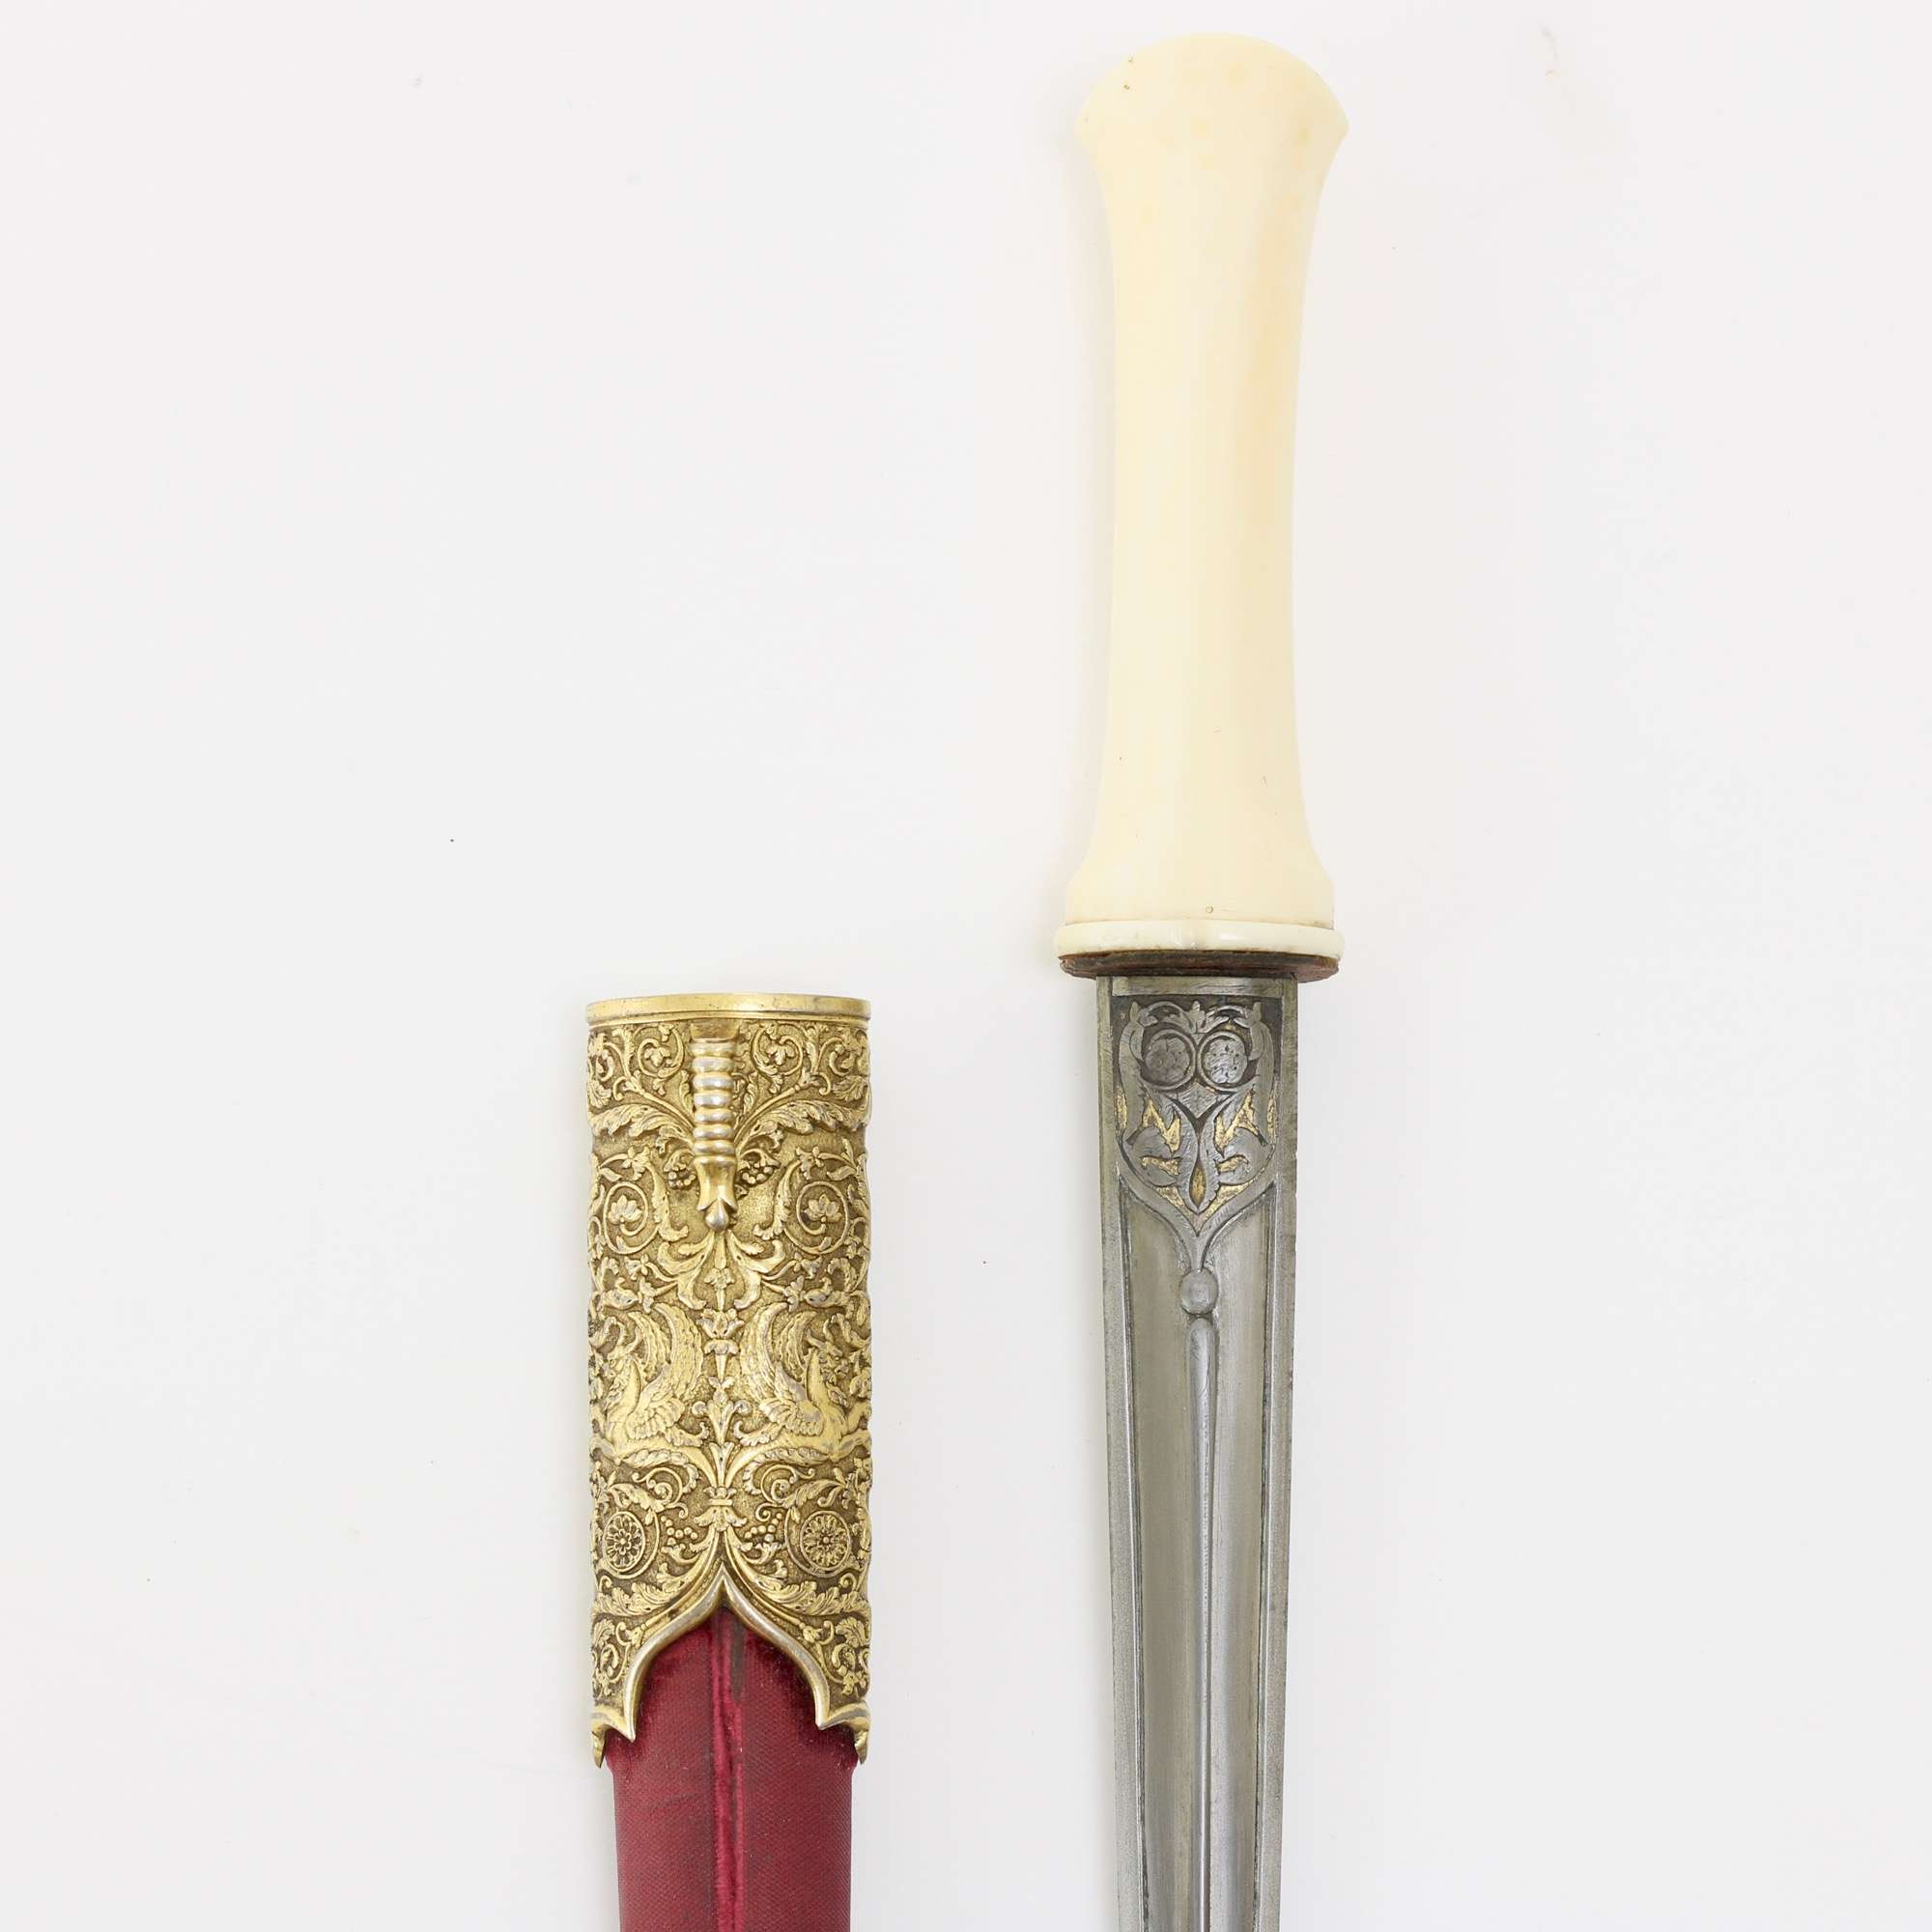 Ottoman court dagger with renaissance style decor